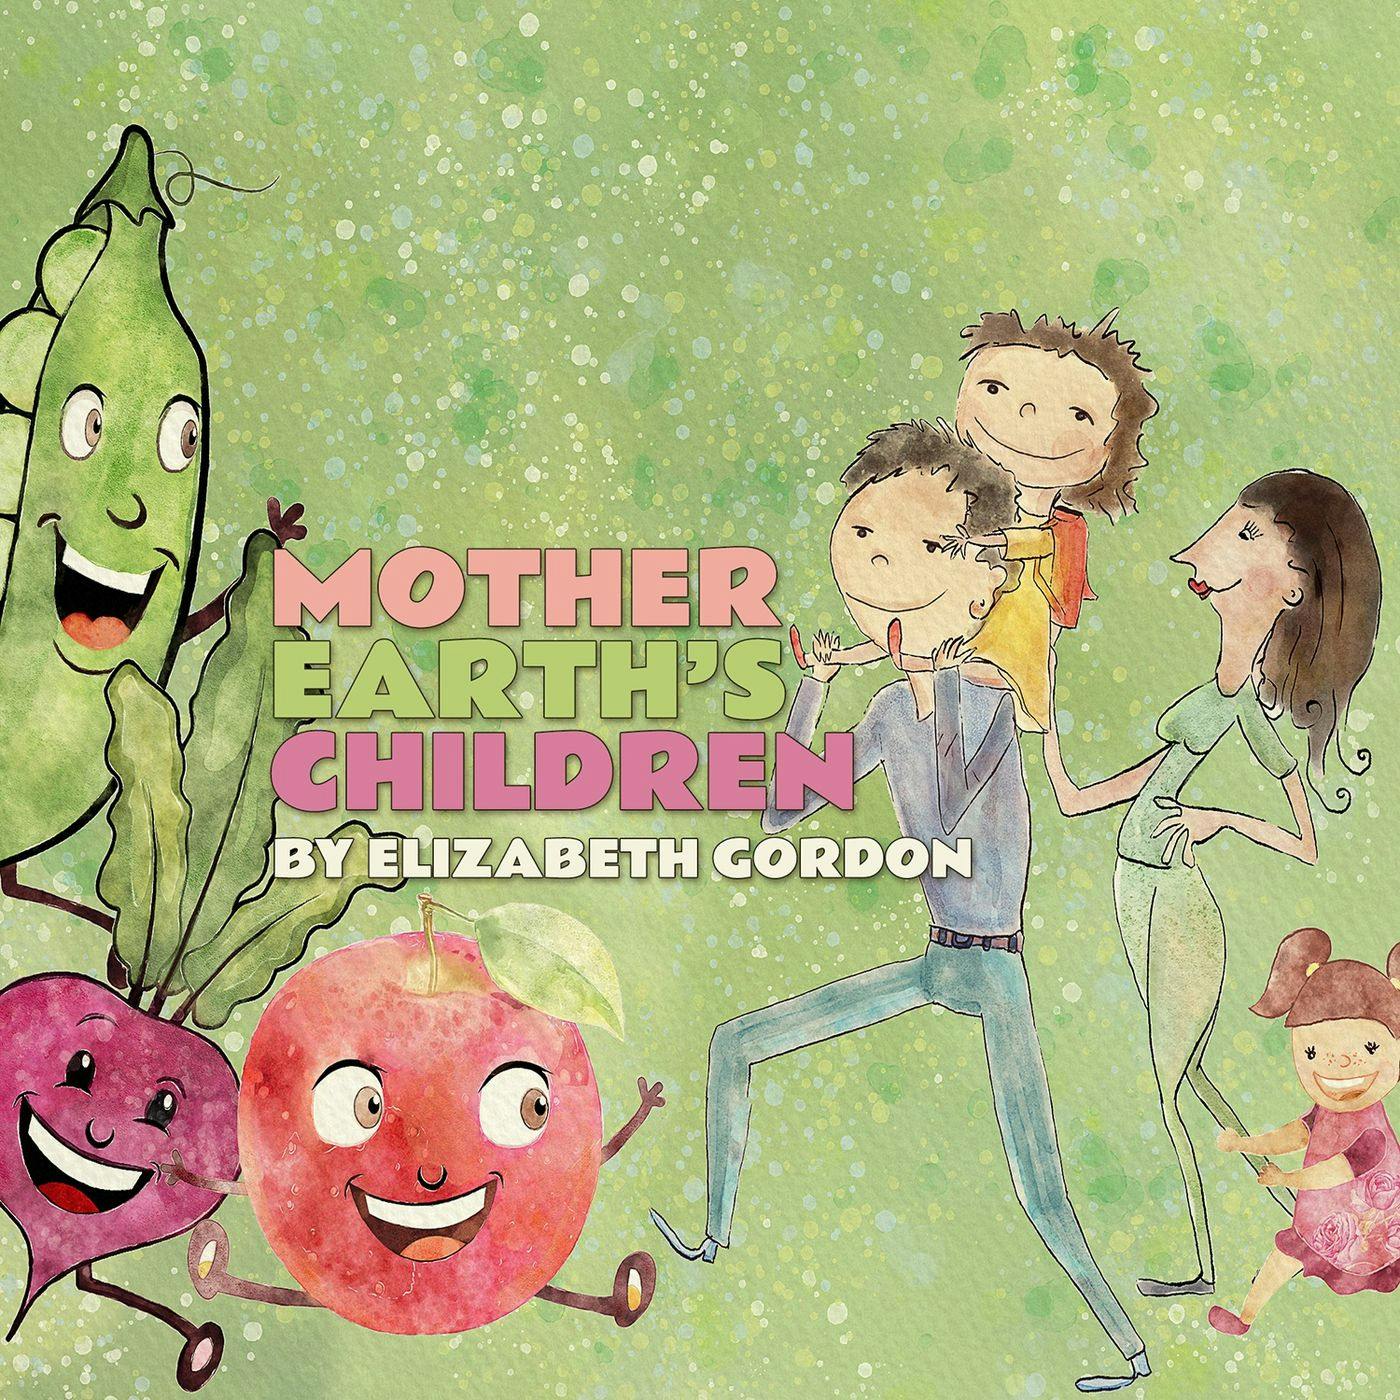 Mother Earth's Children by Elizabeth Gordon